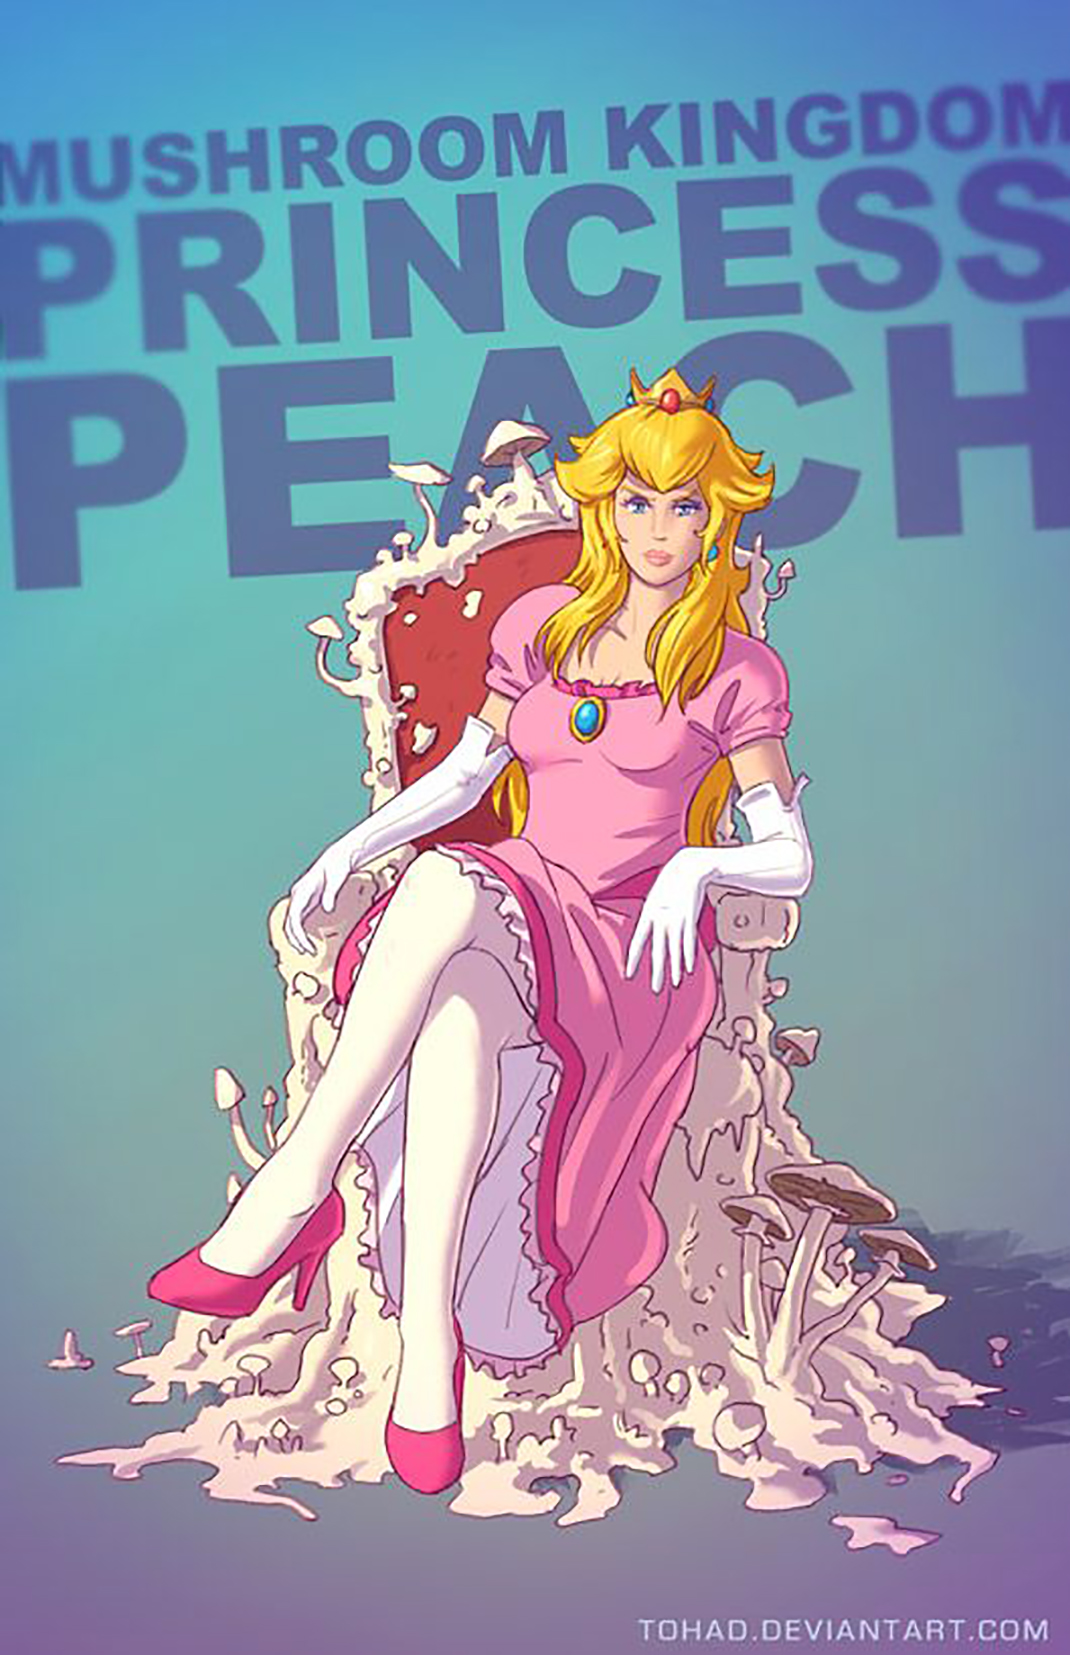 Princesse Peach